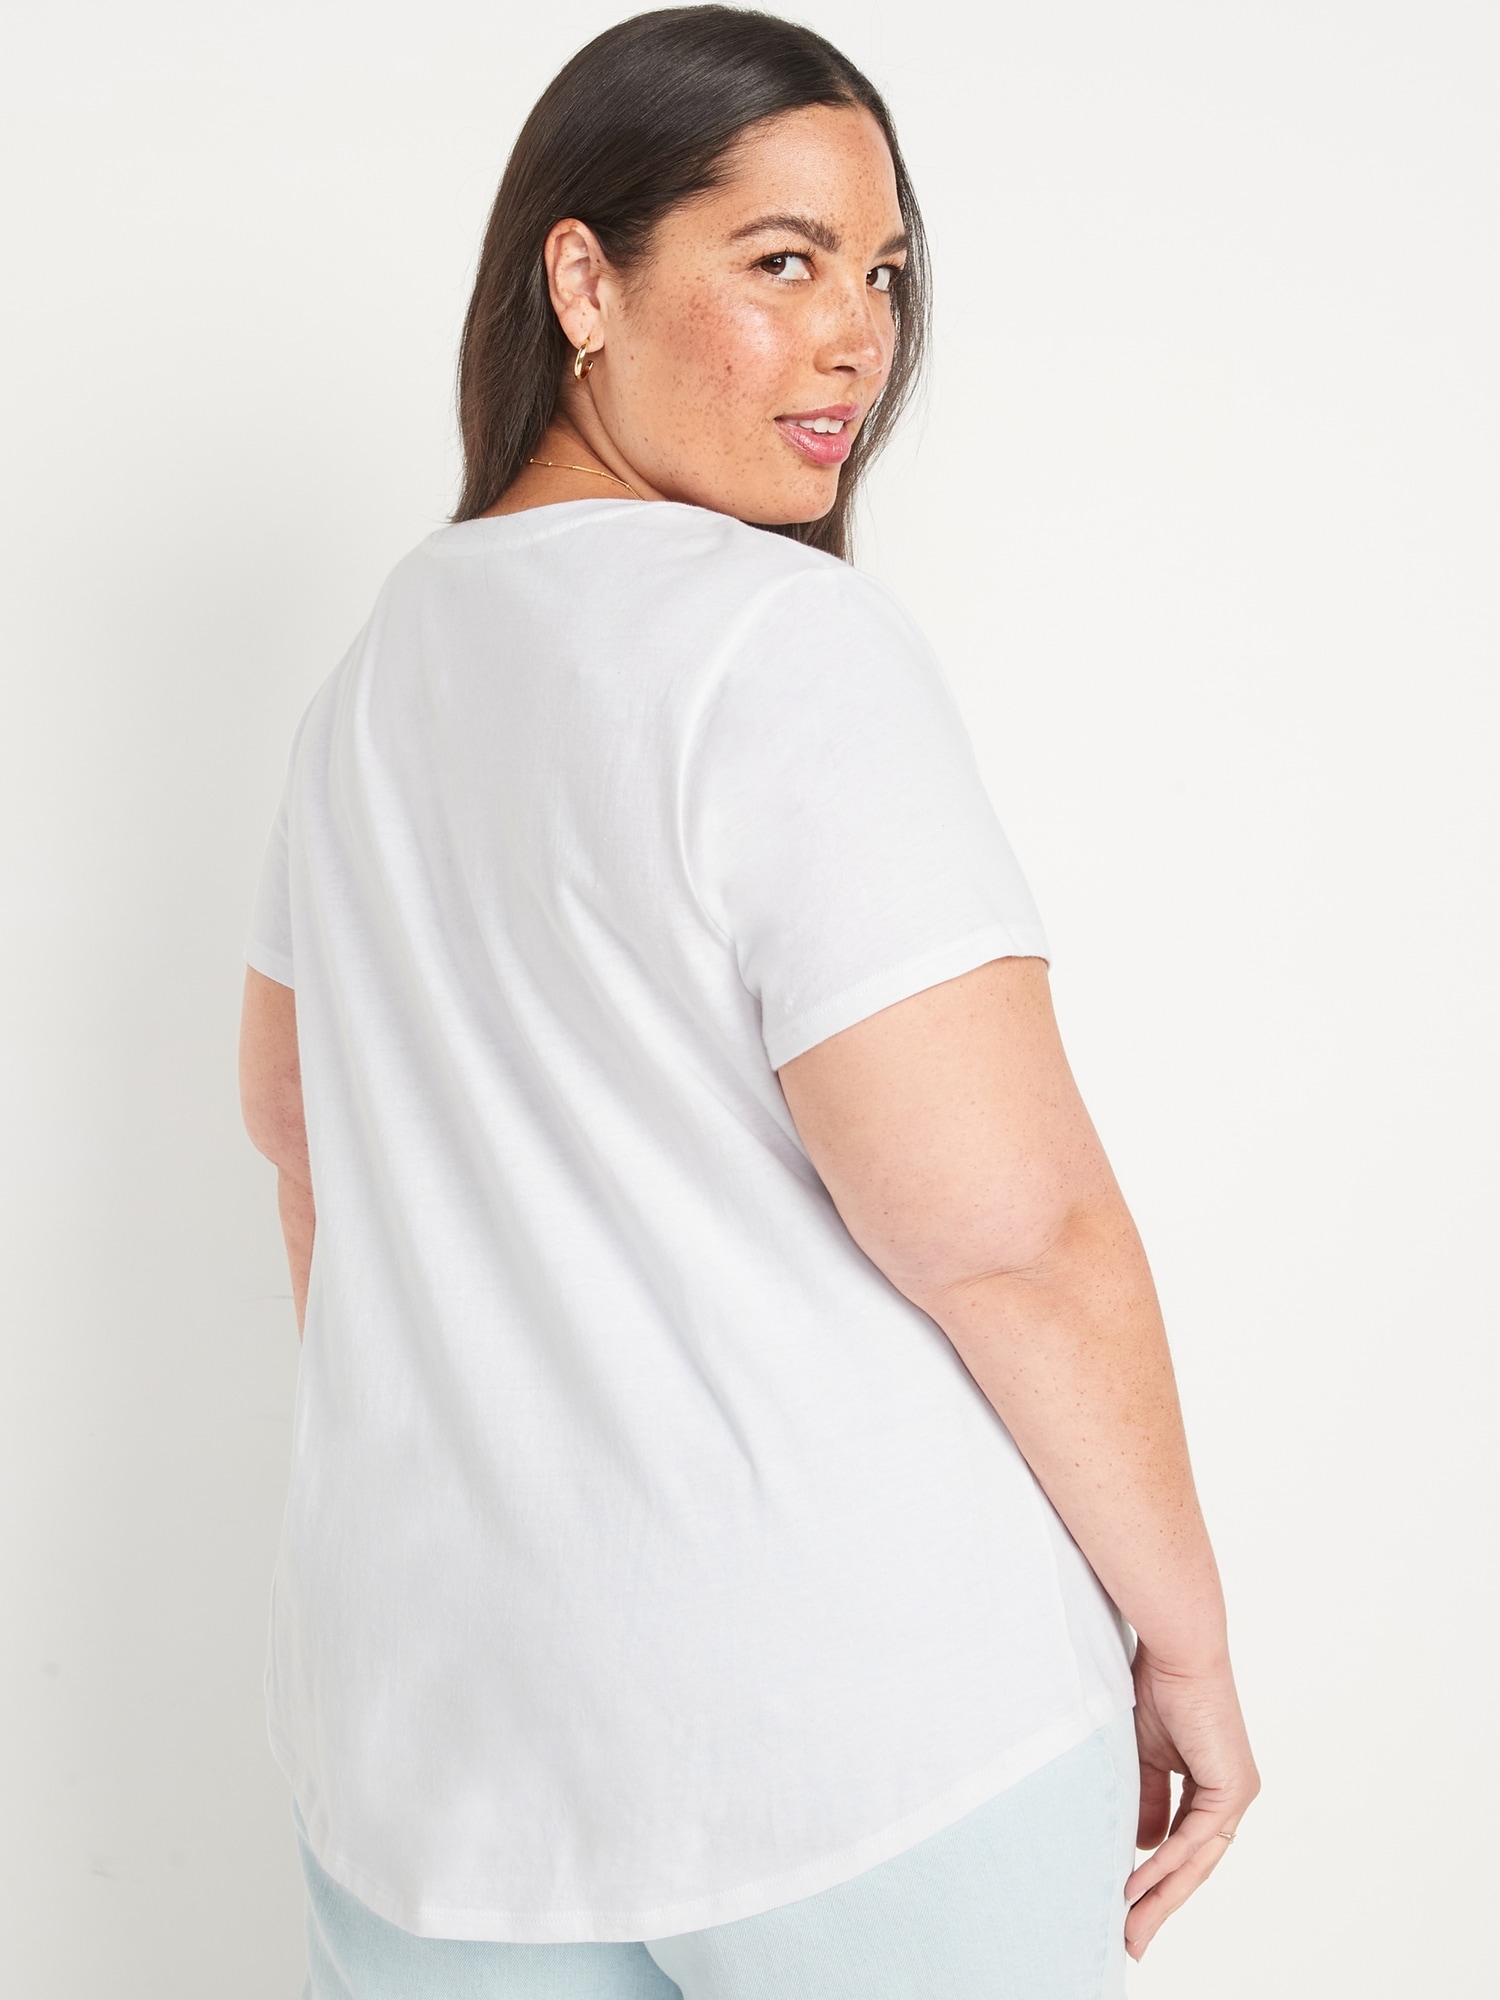 Short-Sleeve EveryWear Logo Graphic T-Shirt for Women | Old Navy